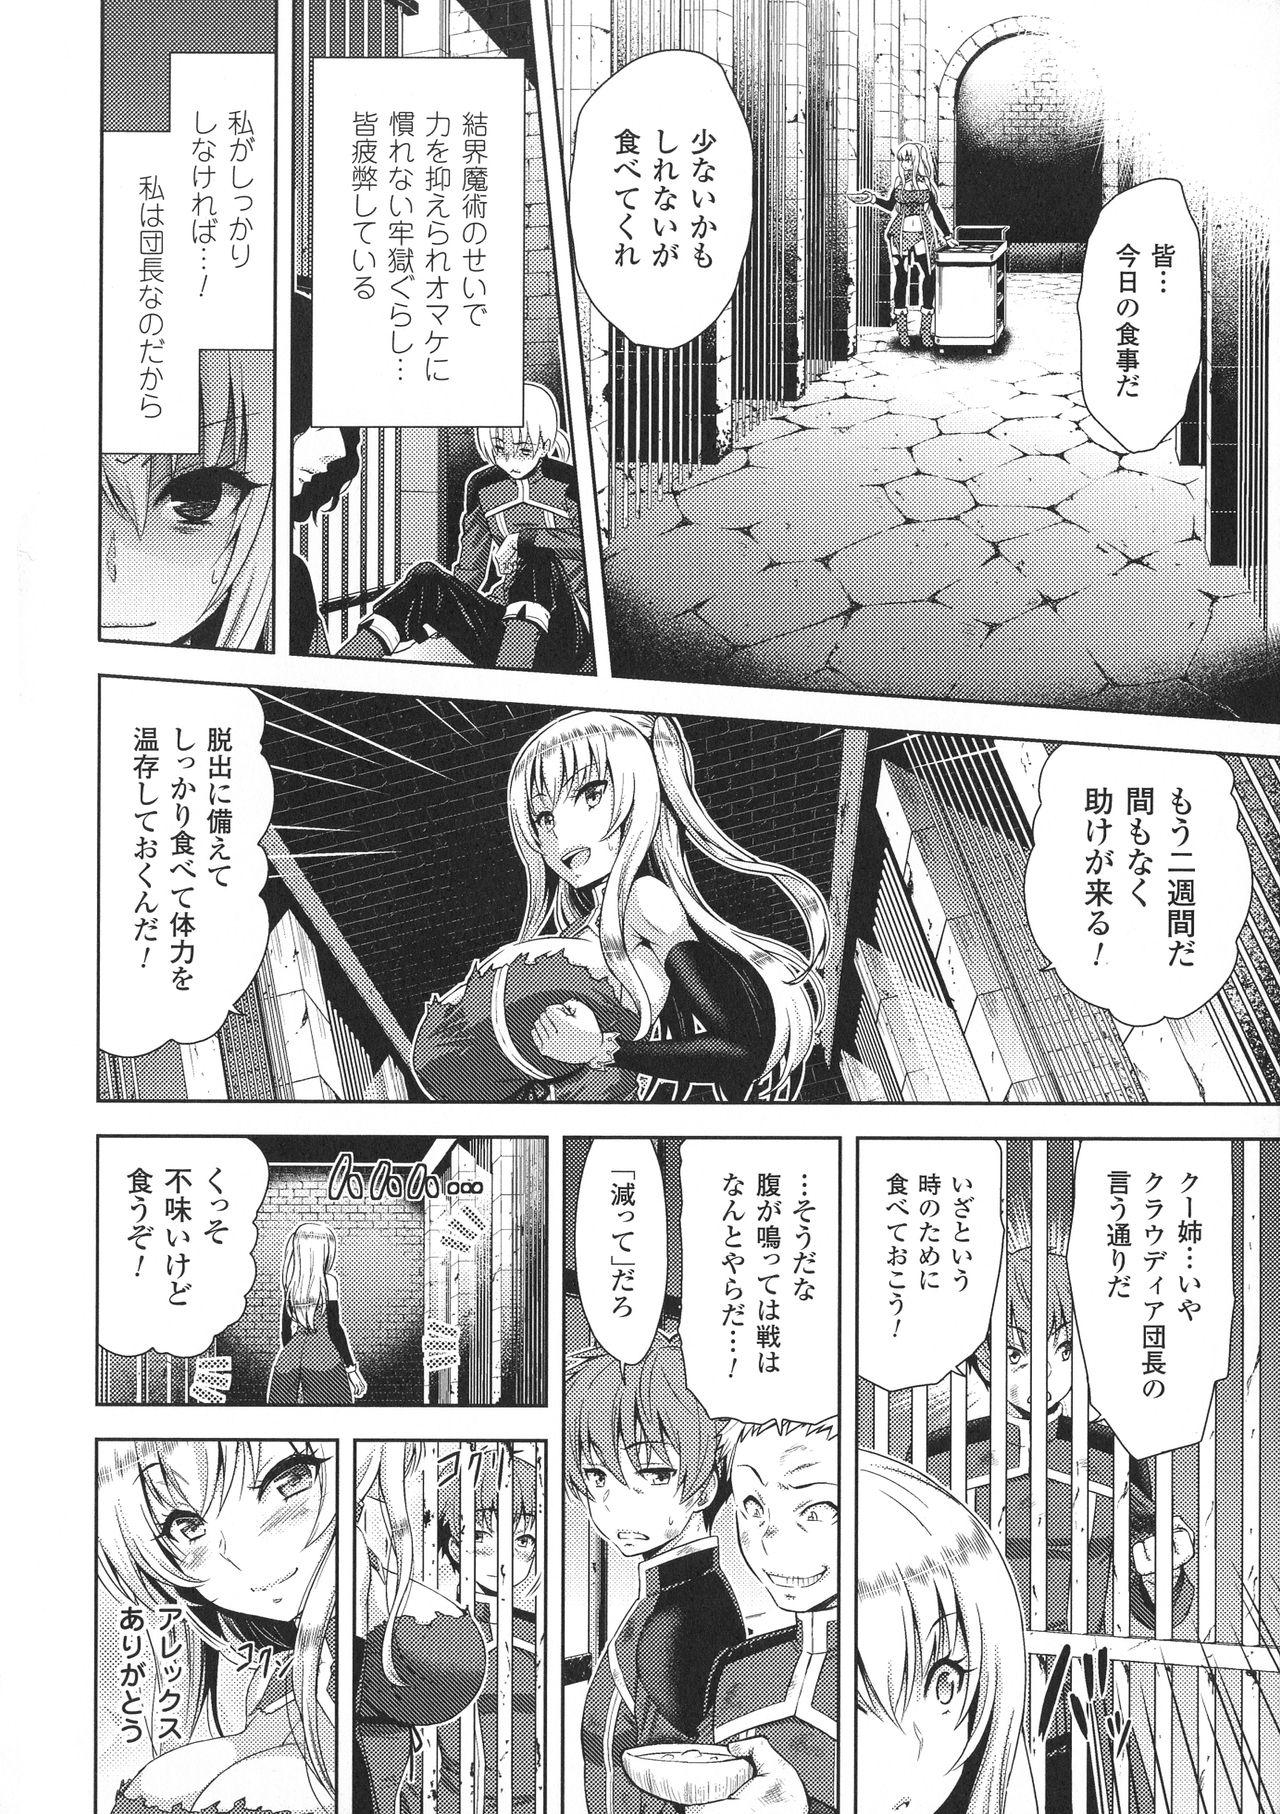 Seigi no Heroine Kangoku File DX Vol. 8 31